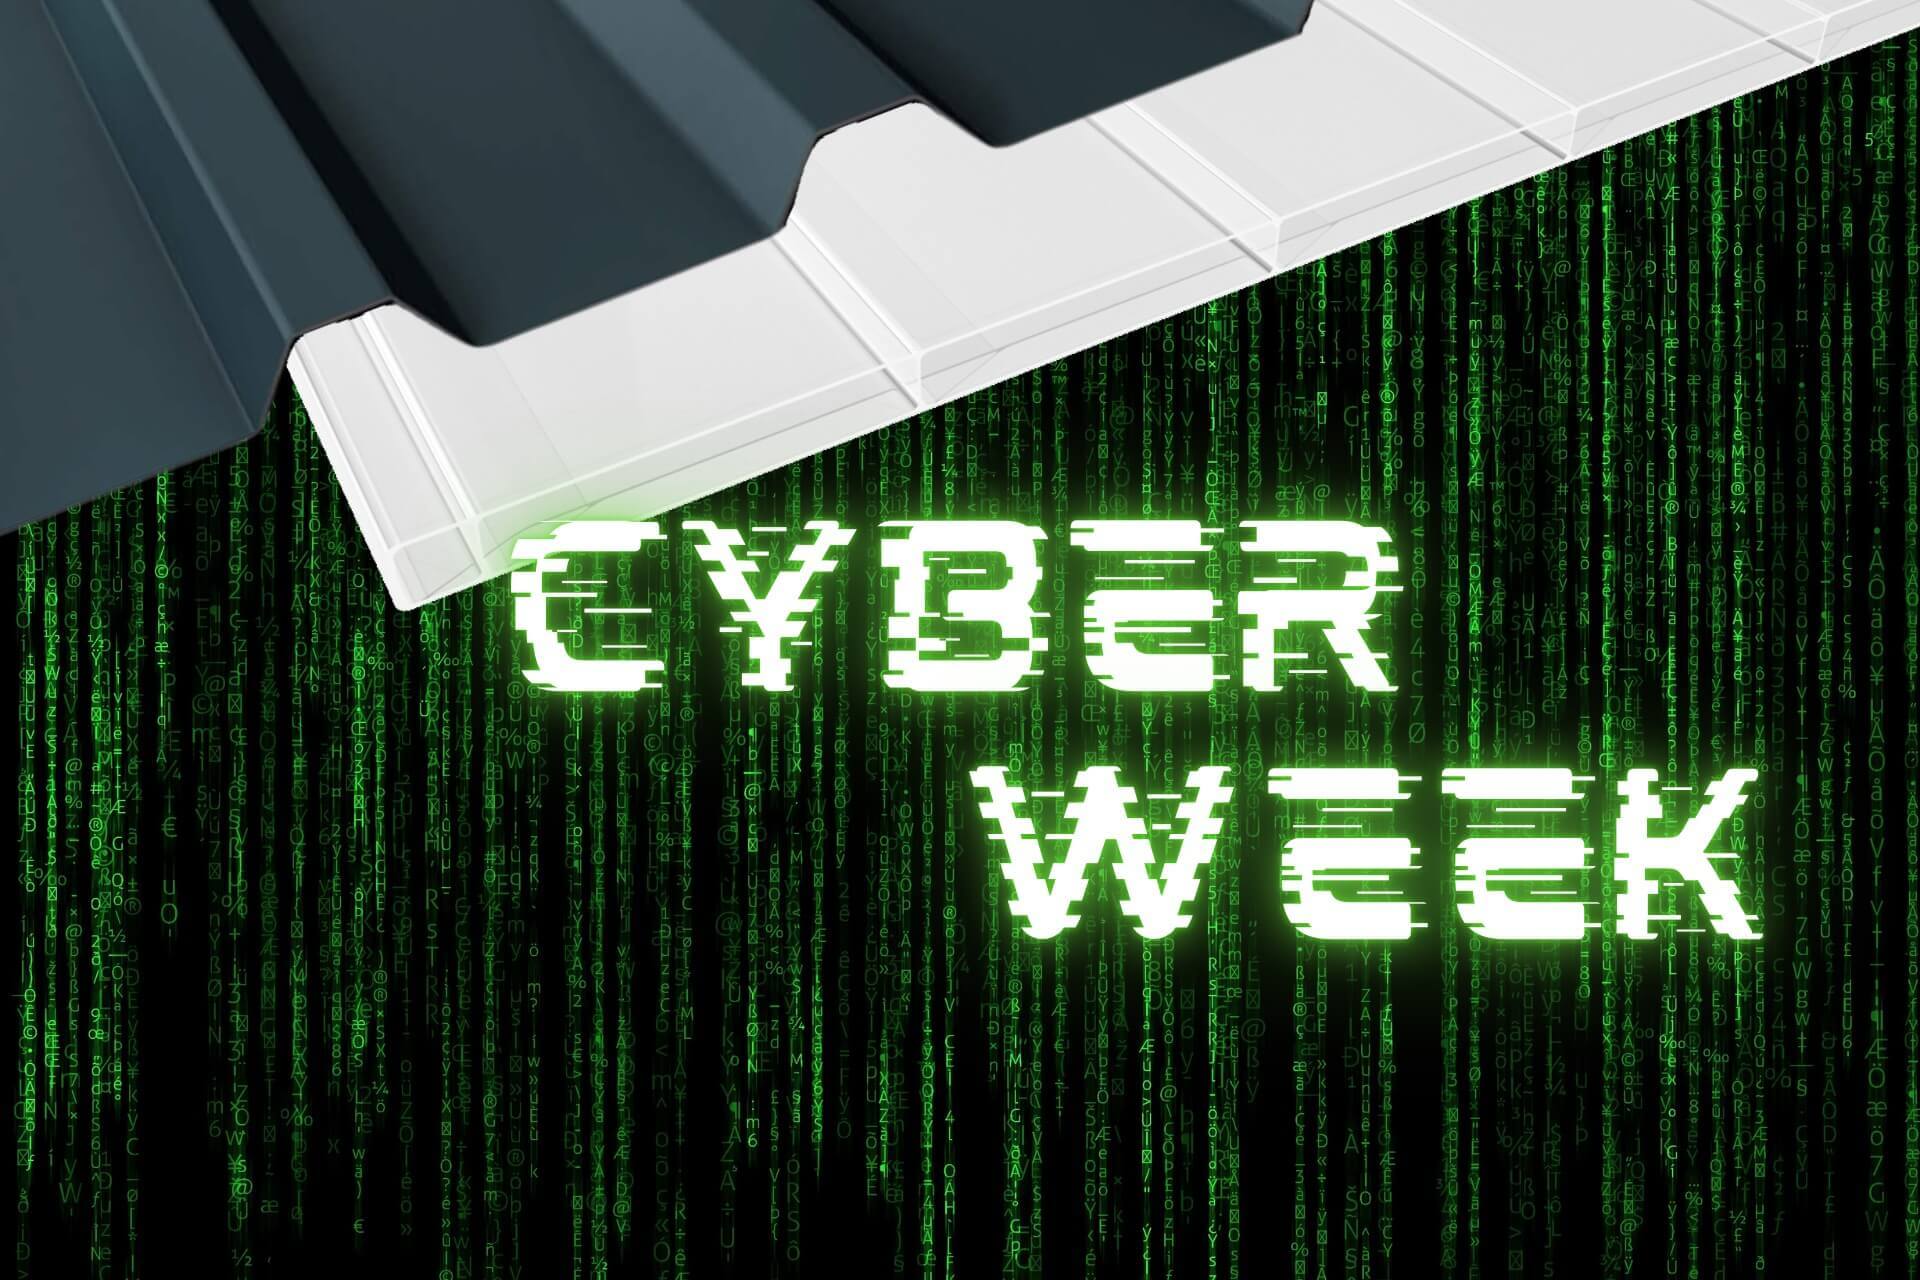 Cyber Week Rabatt - 10% auf alles!